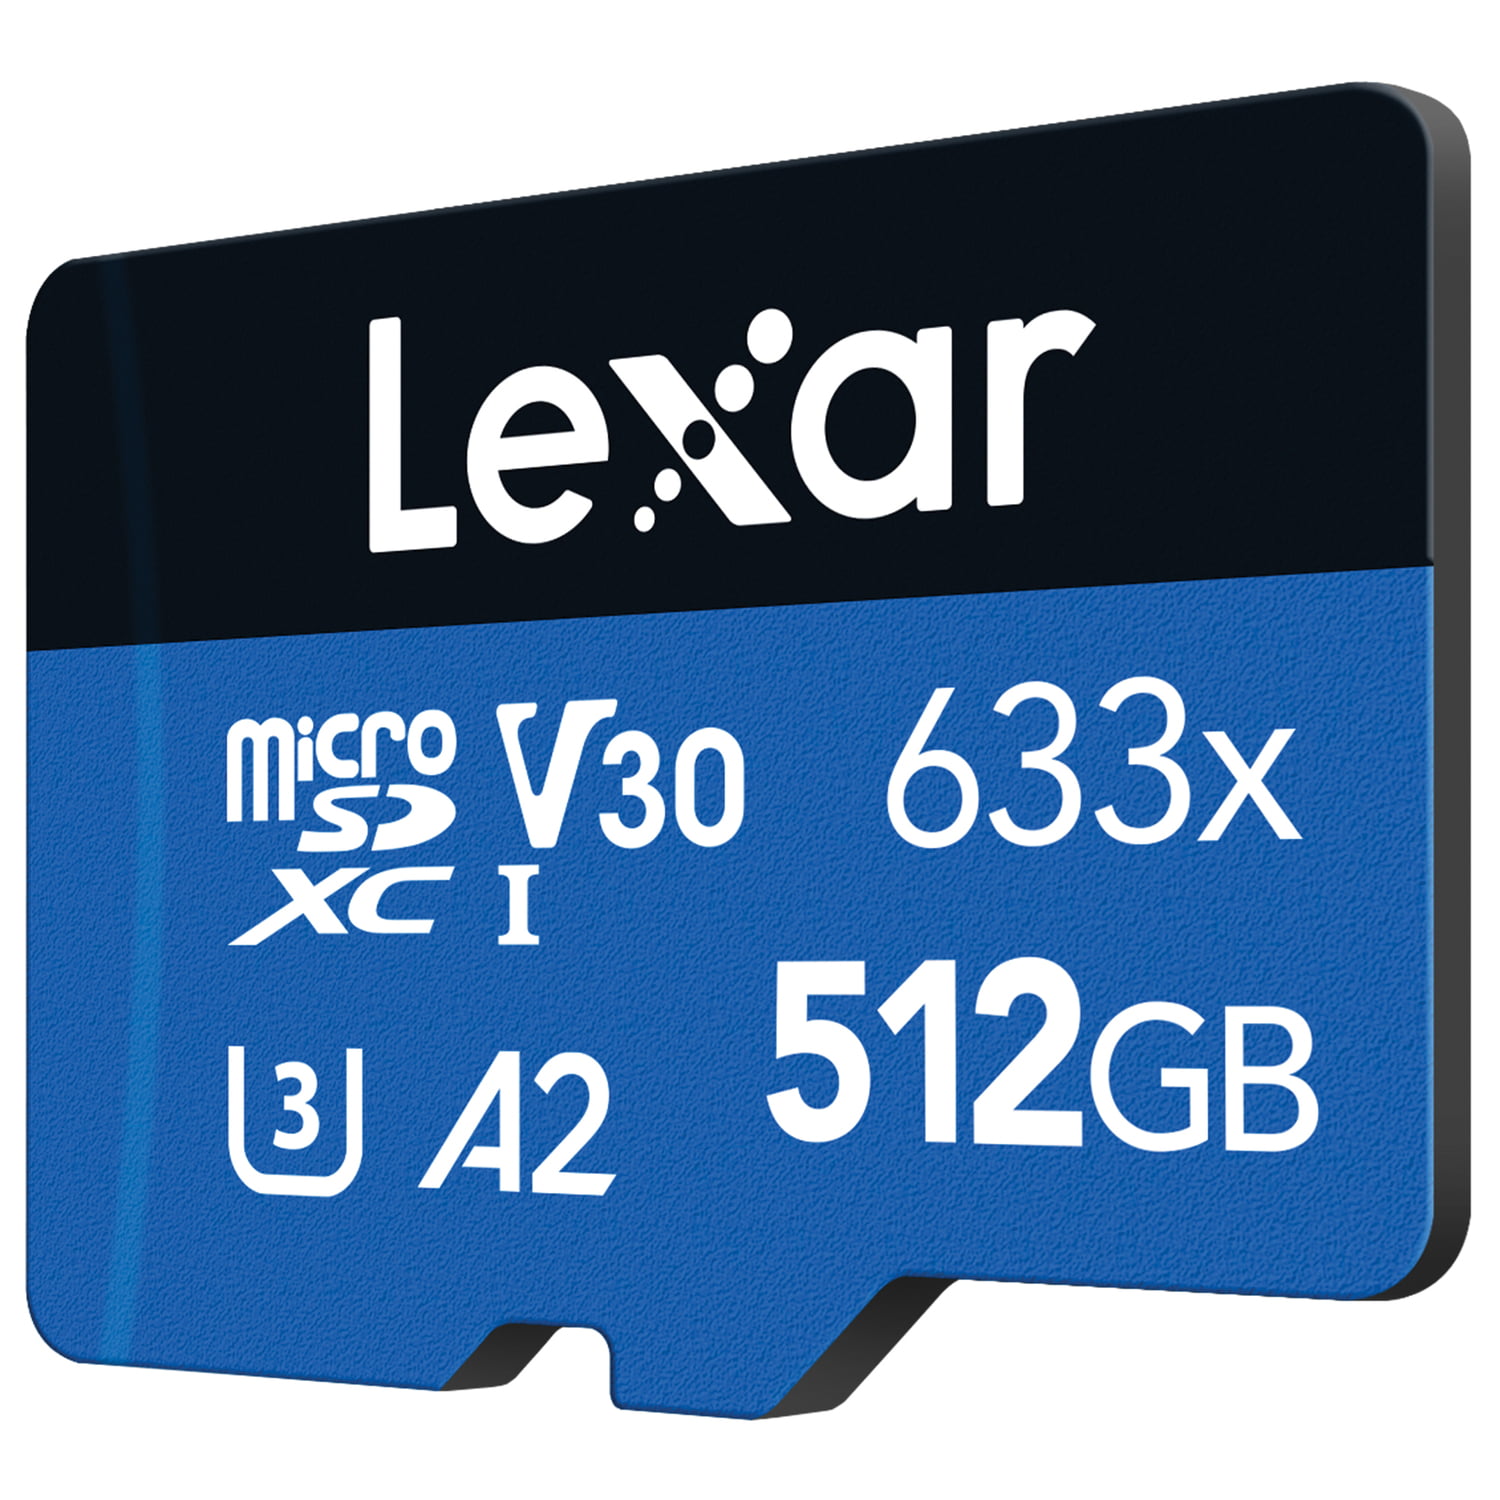 Lexar 512GB High Performance 633X MicroSDHC UHS-I - Walmart